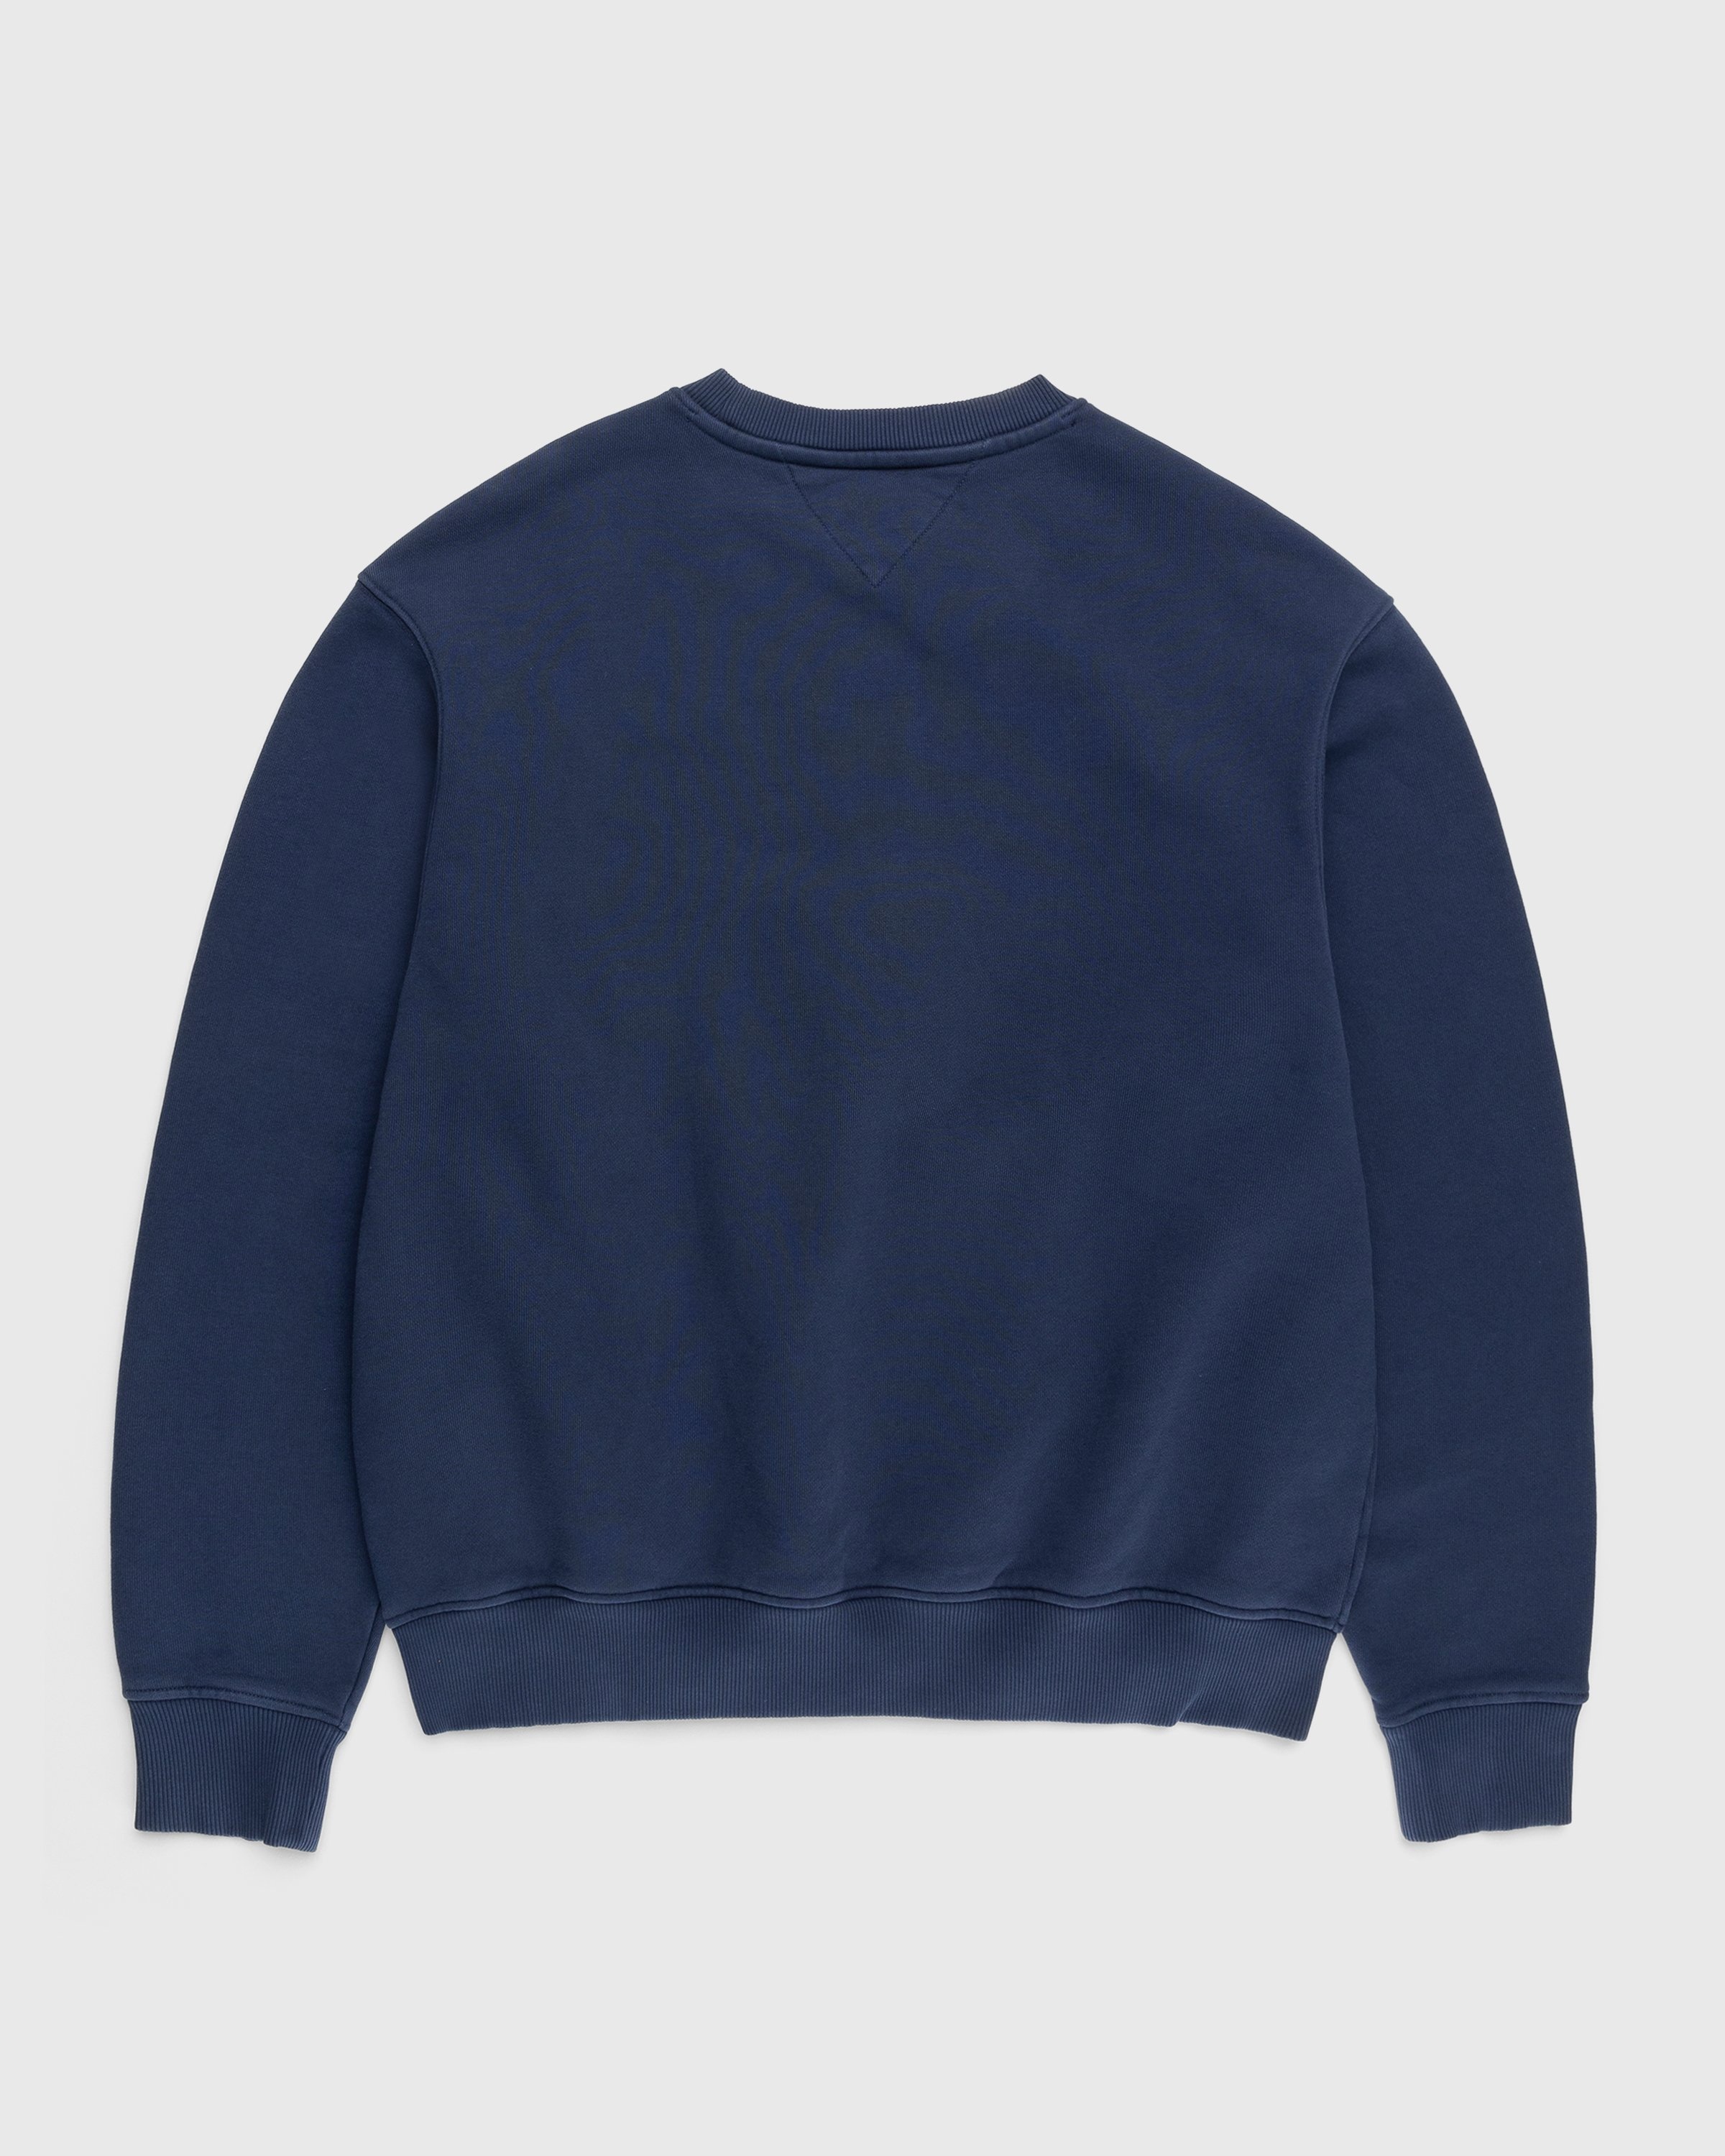 Patta x Tommy Hilfiger – Crewneck Sweatshirt Sport Navy | Highsnobiety Shop